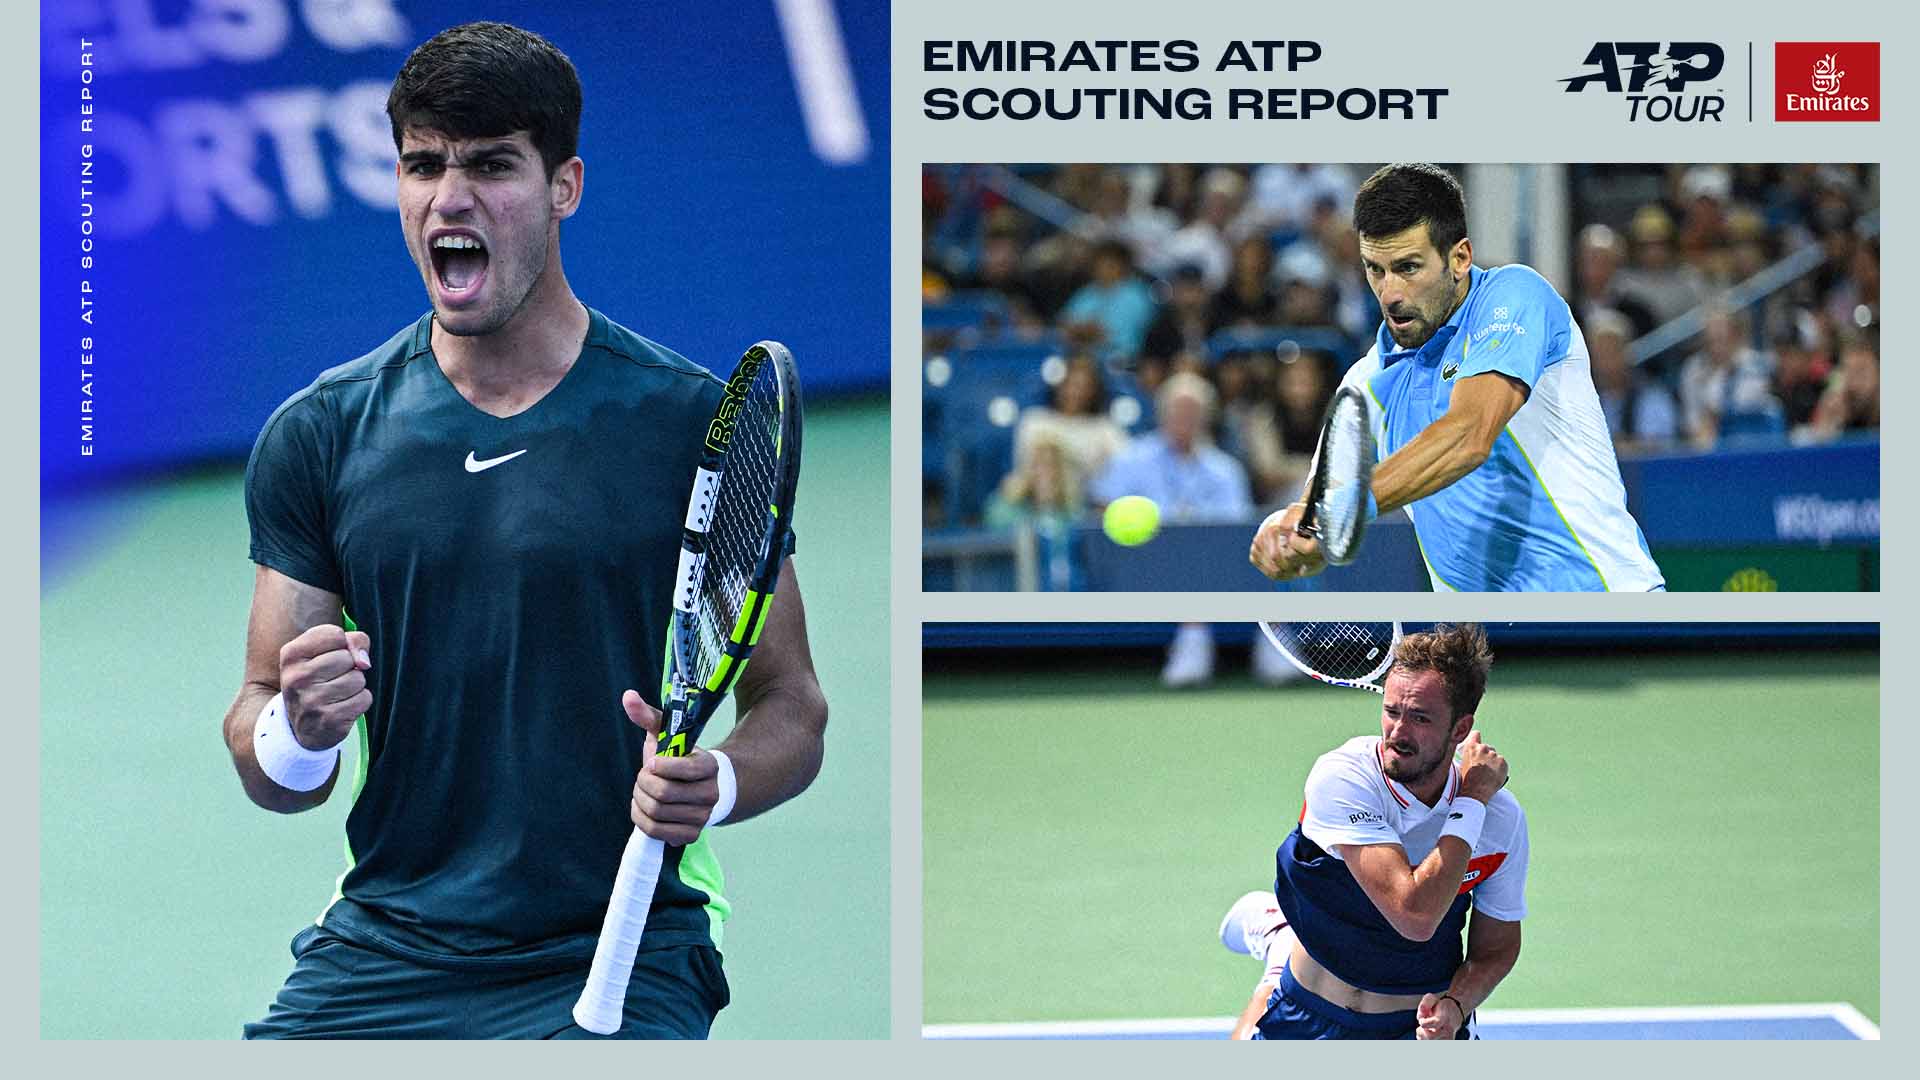 Scouting Report Can Anyone Stop Alcaraz and Djokovic At US Open? ATP Tour Tennis